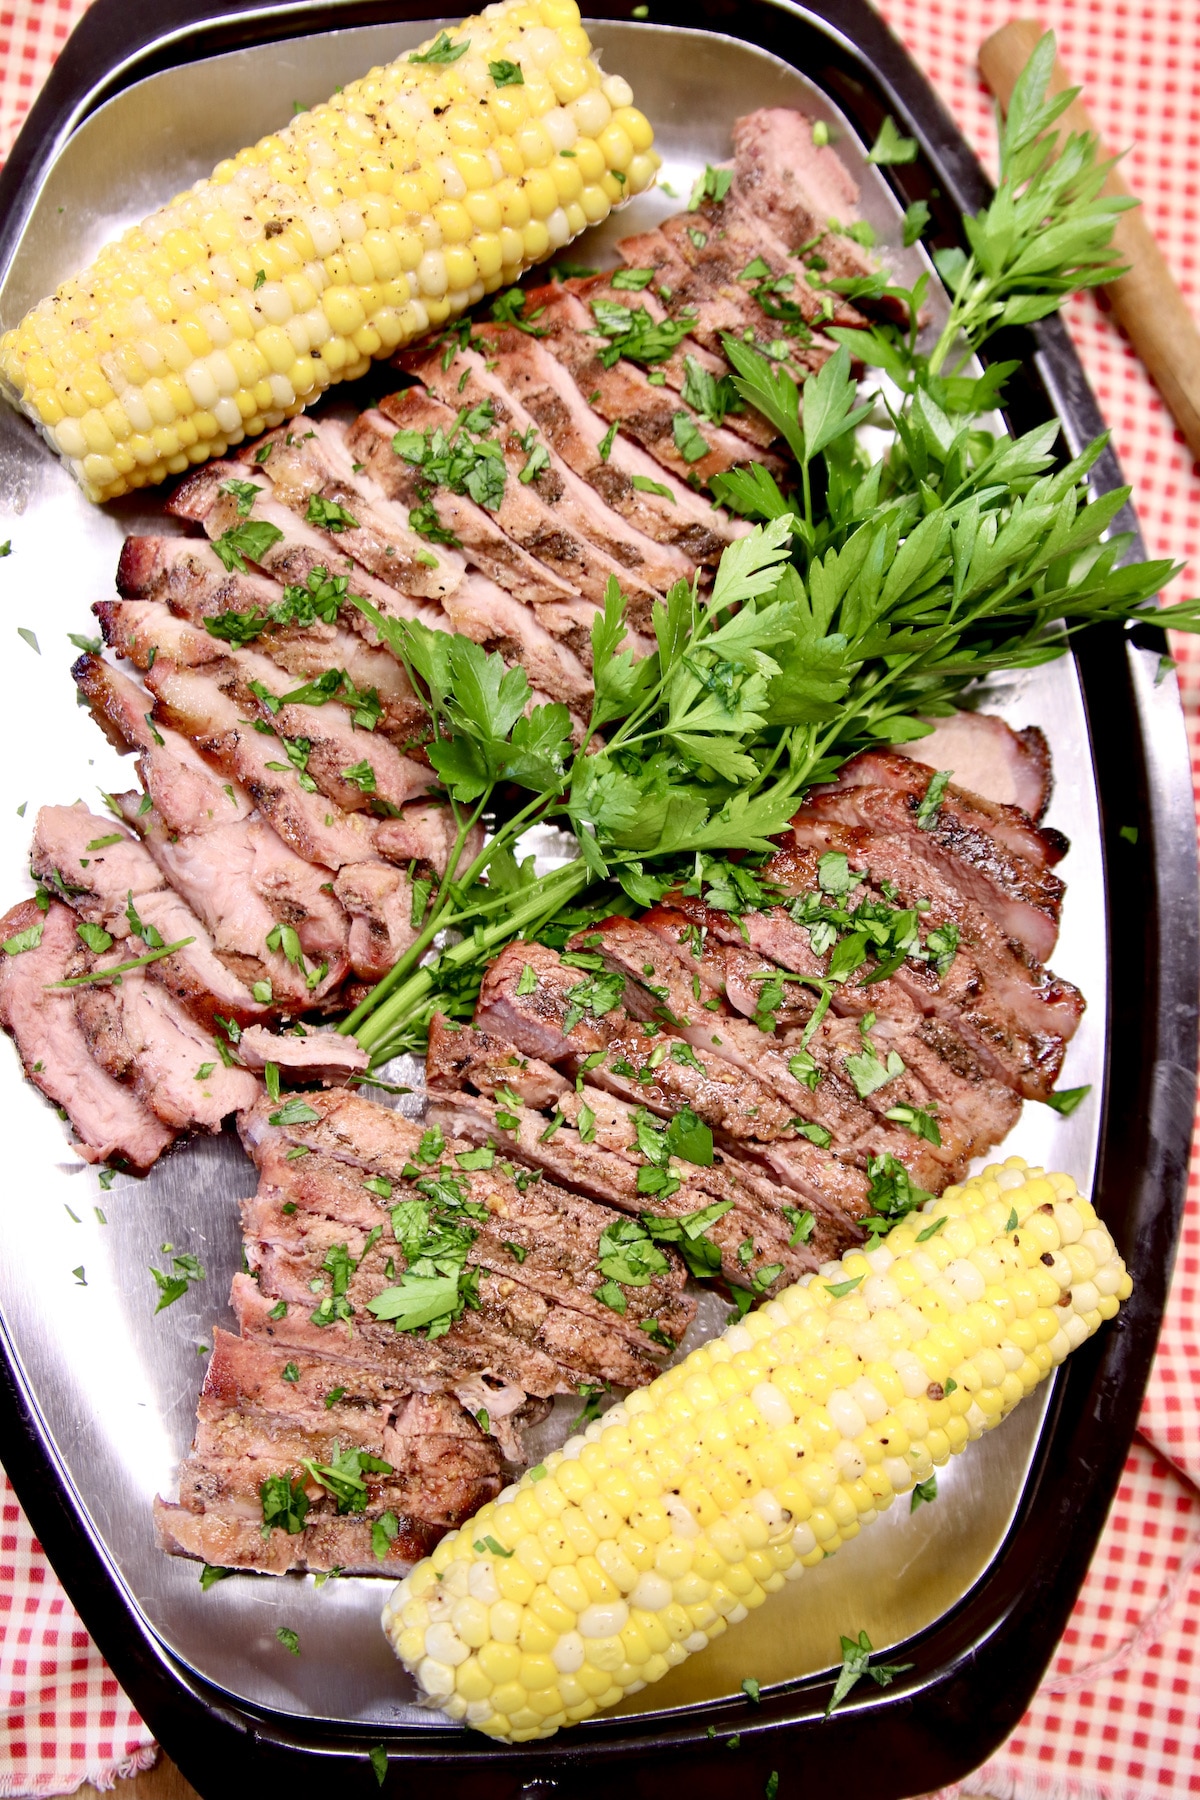 Platter of sliced pork steak with 2 corns on the cob.